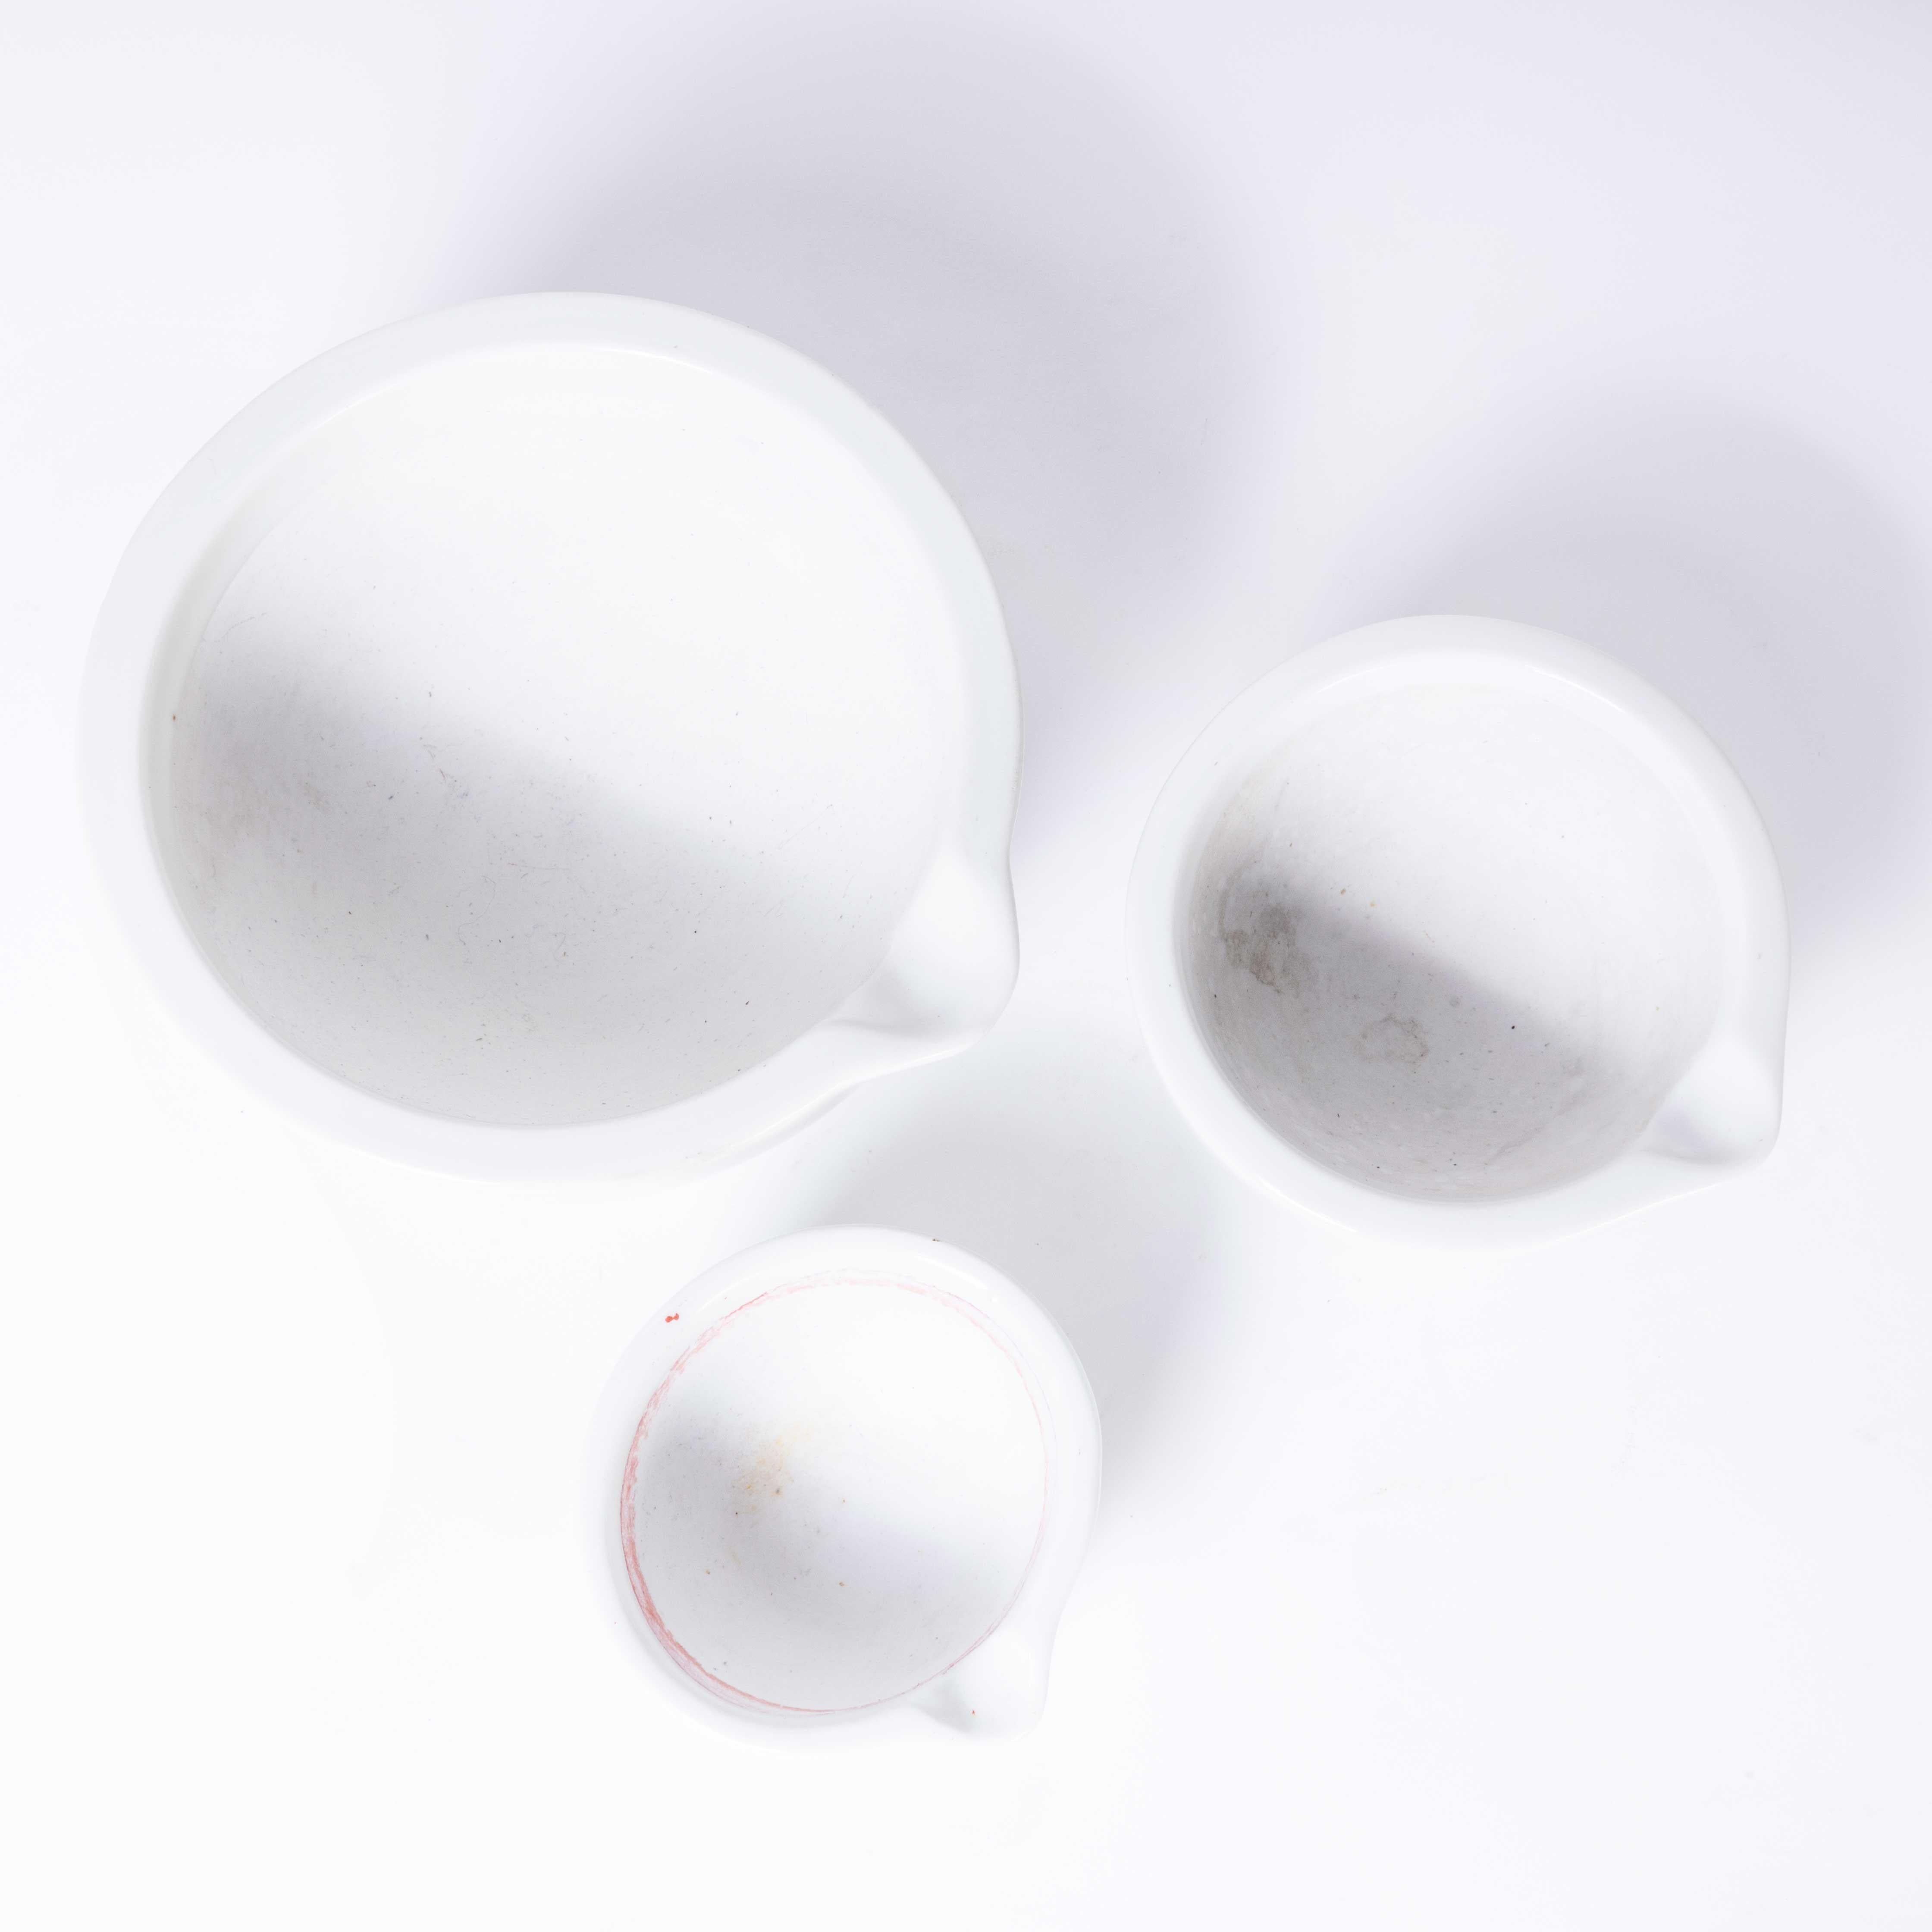 1950’s Heavy Porcelain Scientific white bowls – Set Of Three
1950’s Heavy Porcelain Scientific white bowls – Set Of Three. Handmade in Czech Republic. Three different size white bowls. Small – 8.5cm x 8cm x 4cm. Medium – 11cm x 5cm x 10.5cm. Large